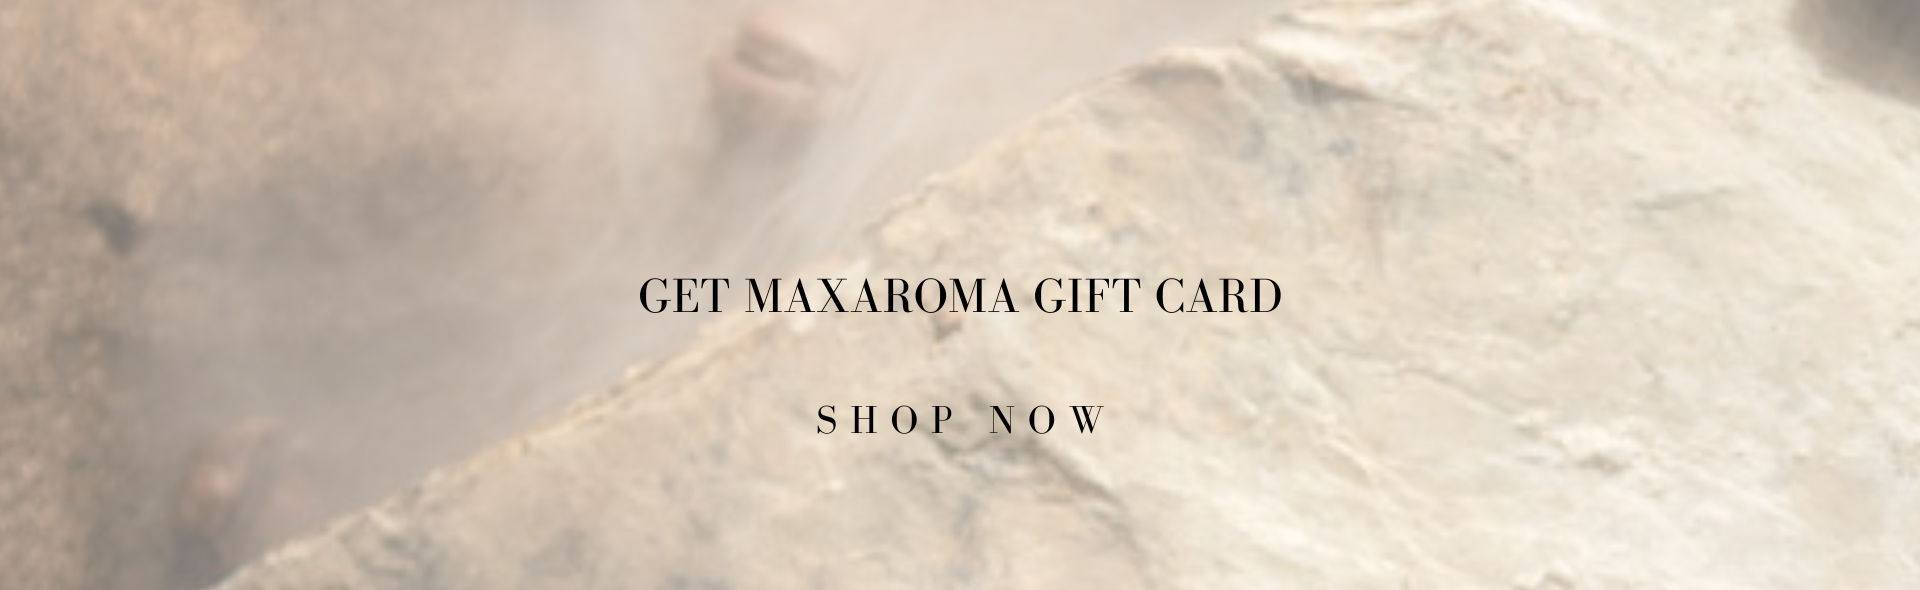 maxaroma gift card